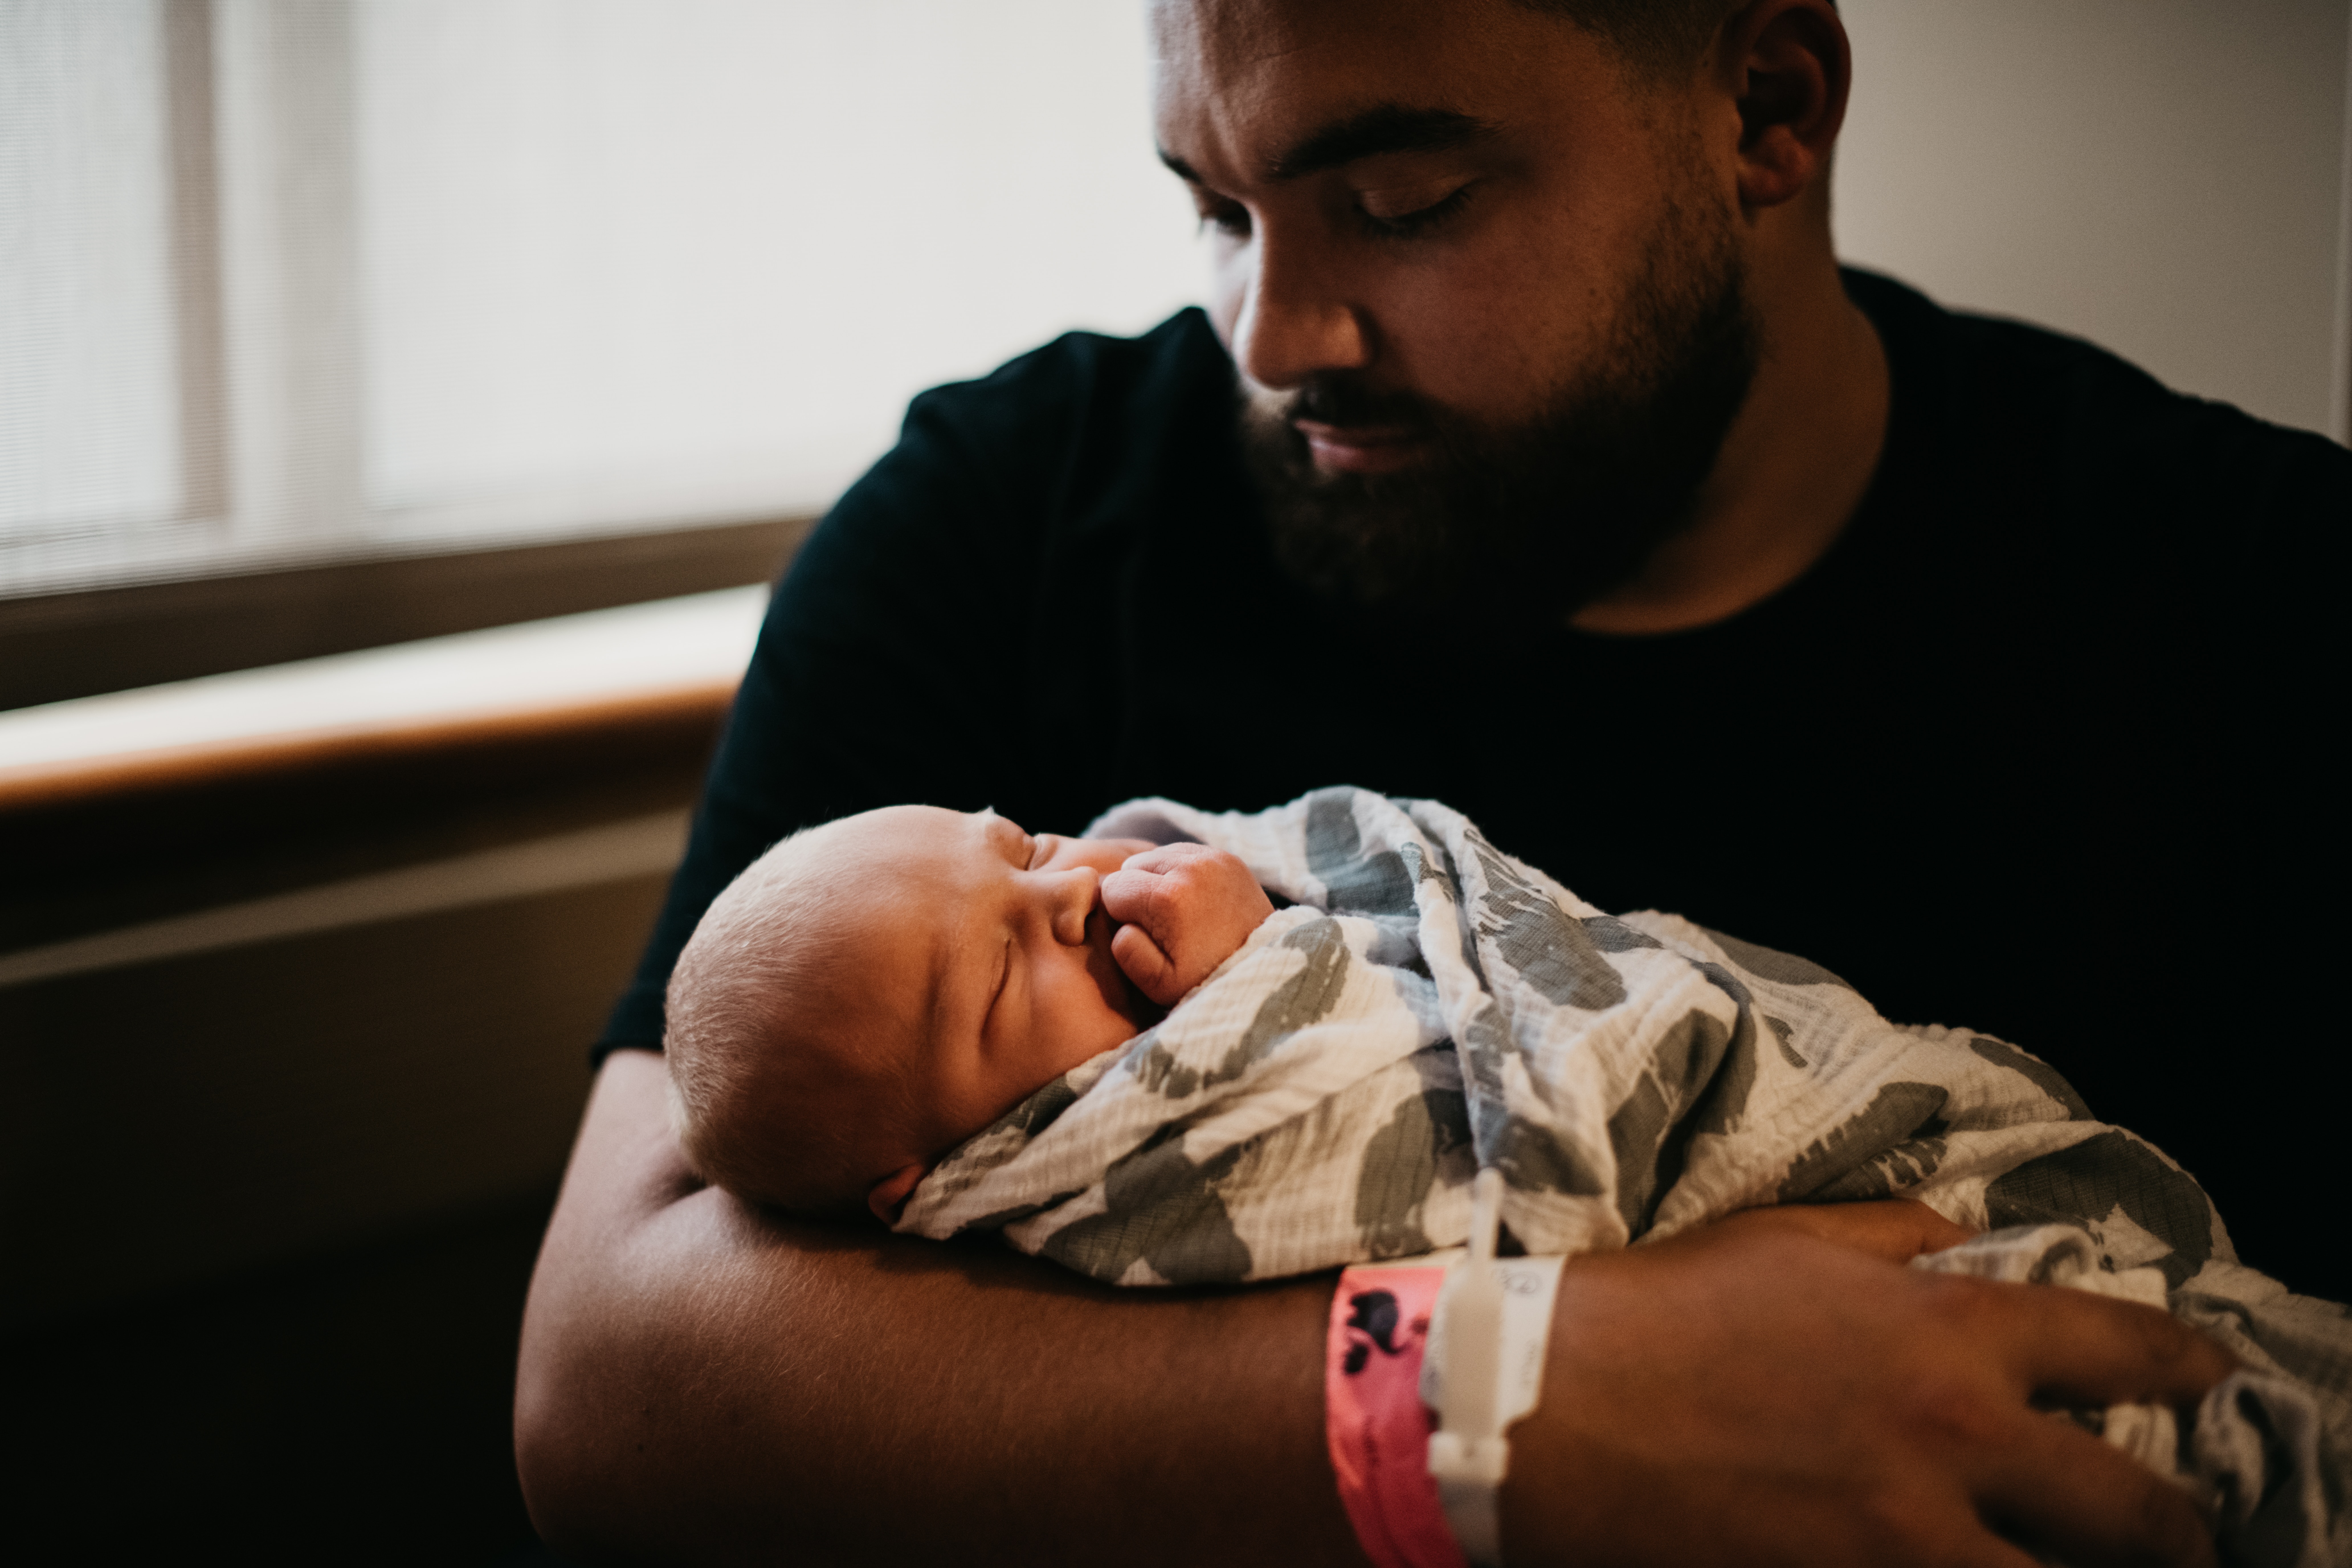 A man holding a newborn baby. | Source: Unsplash